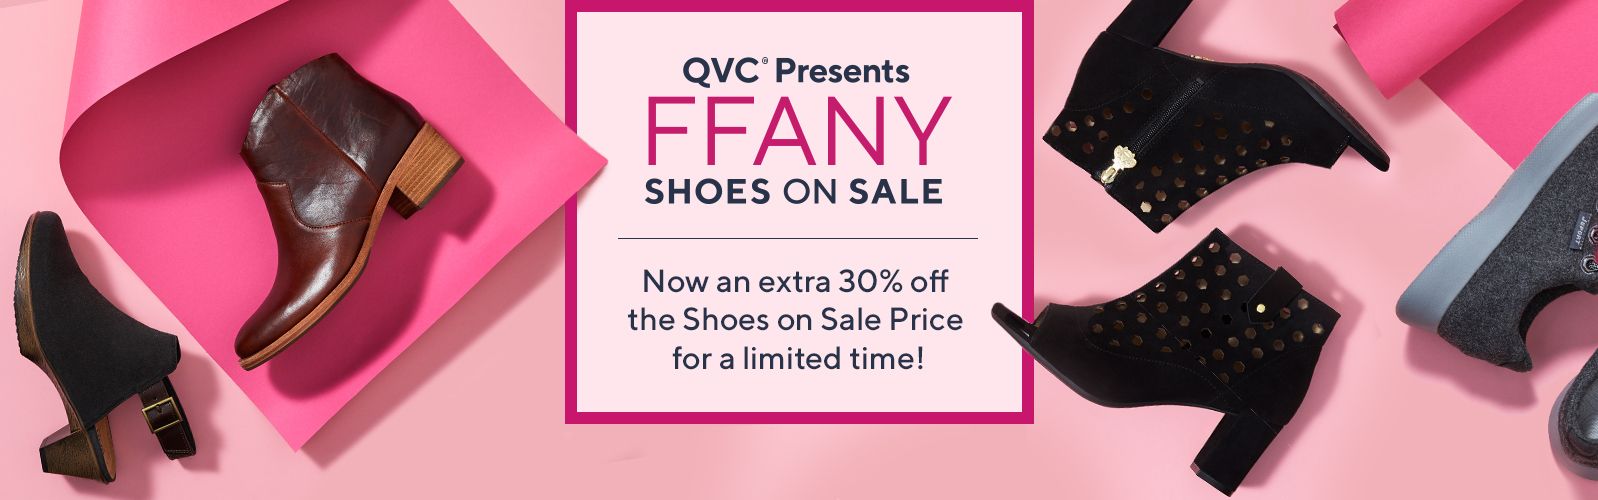 qvc pink shoes